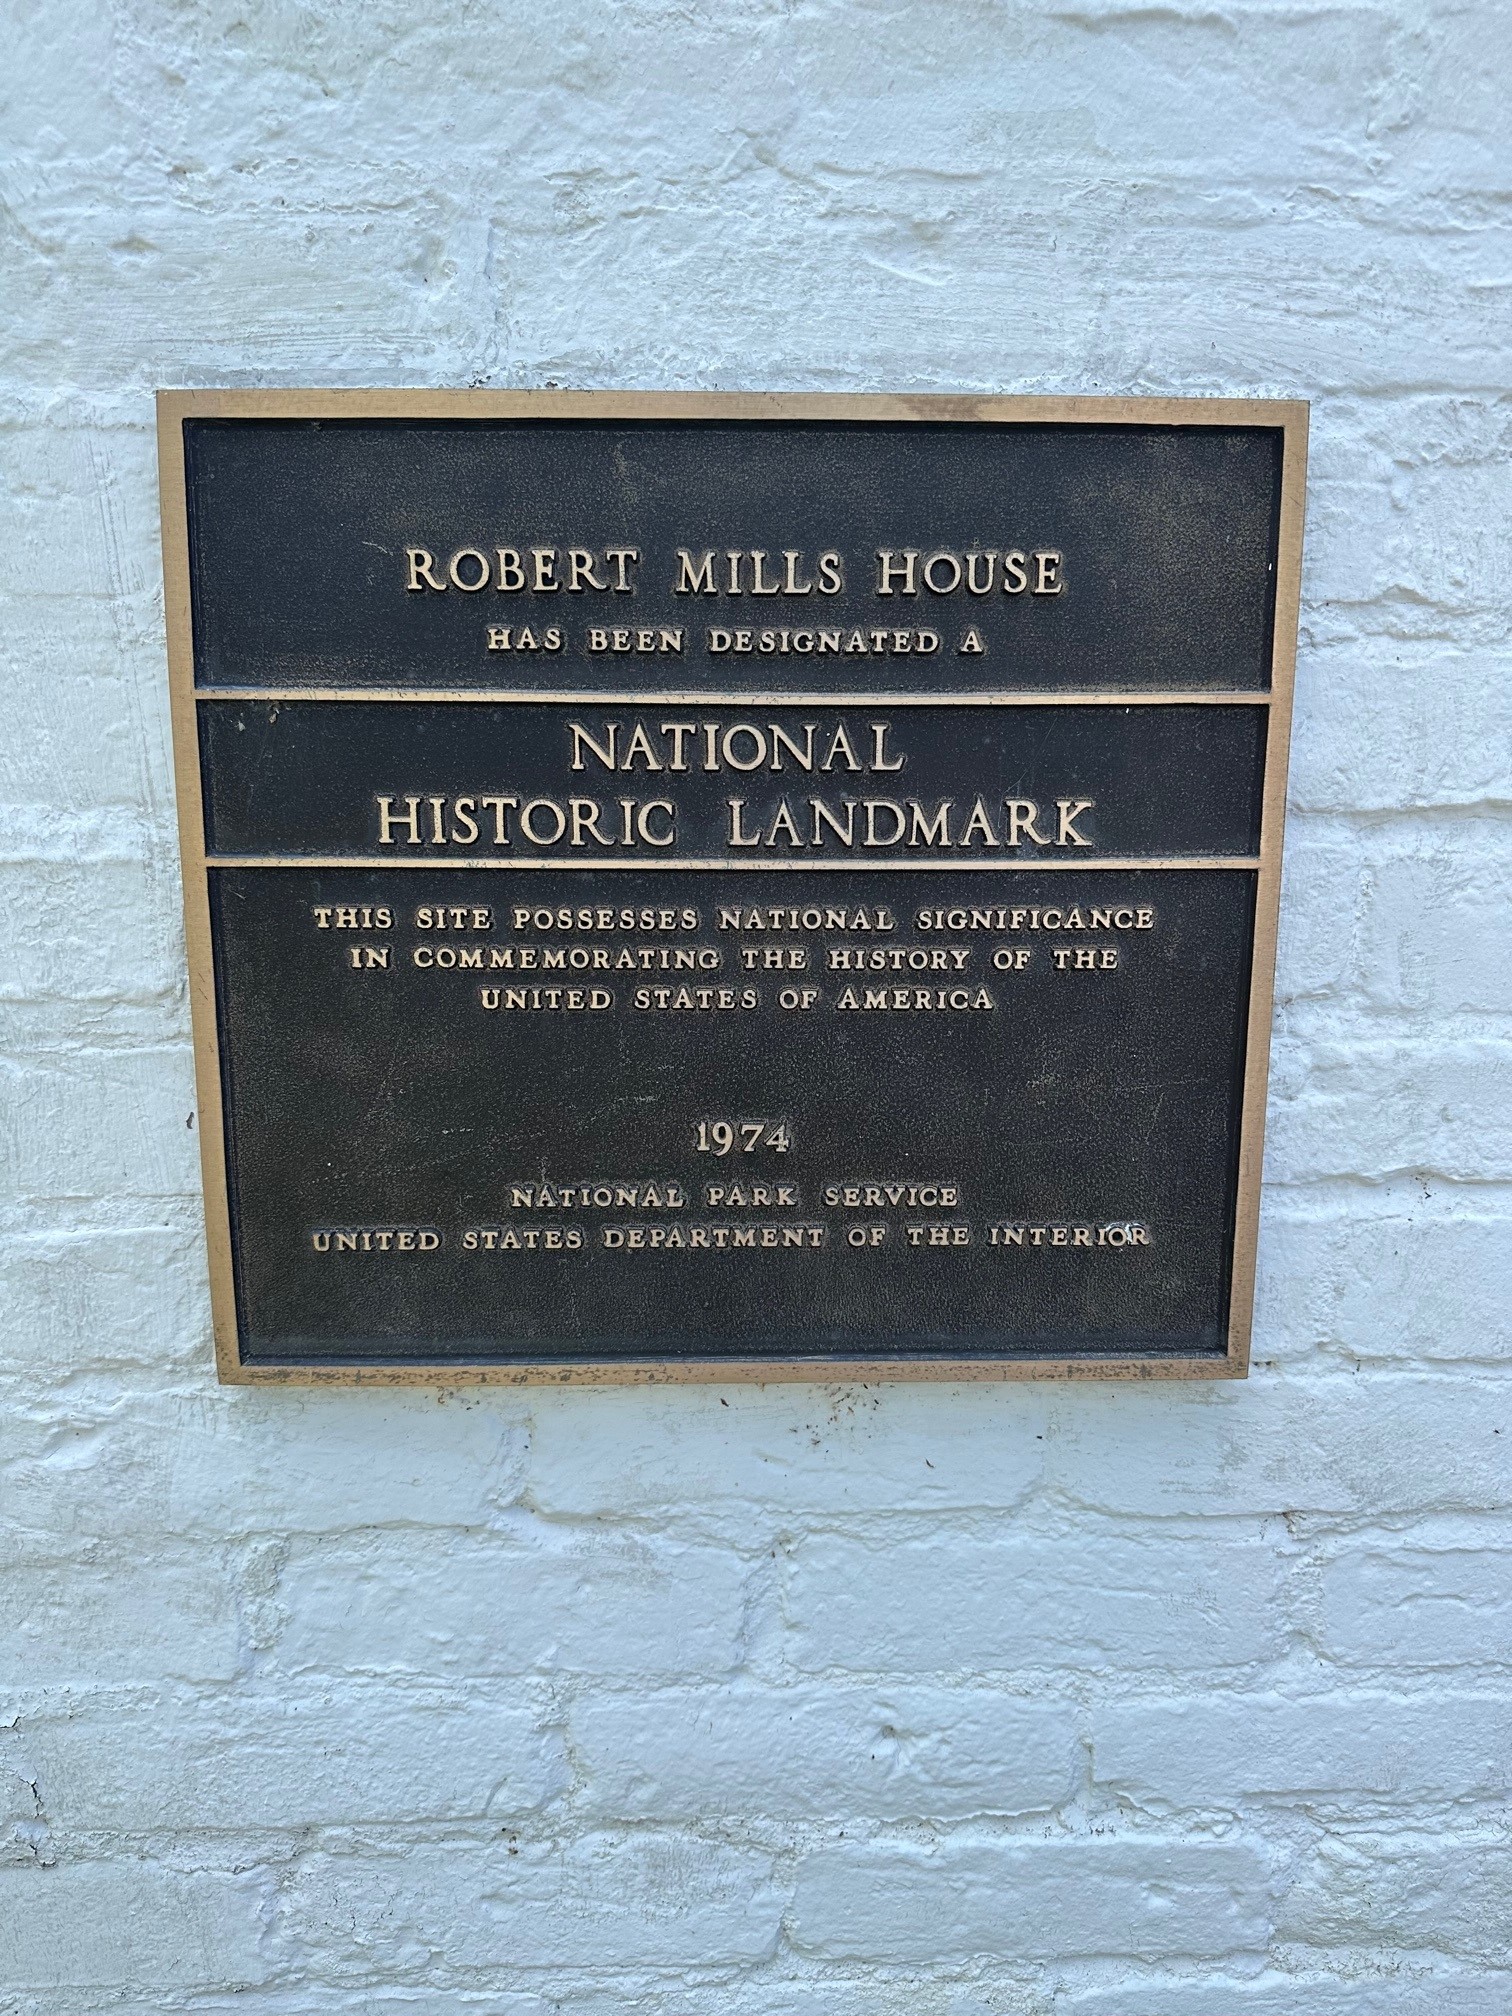 Robert Mills House National Historic Landmark plaque